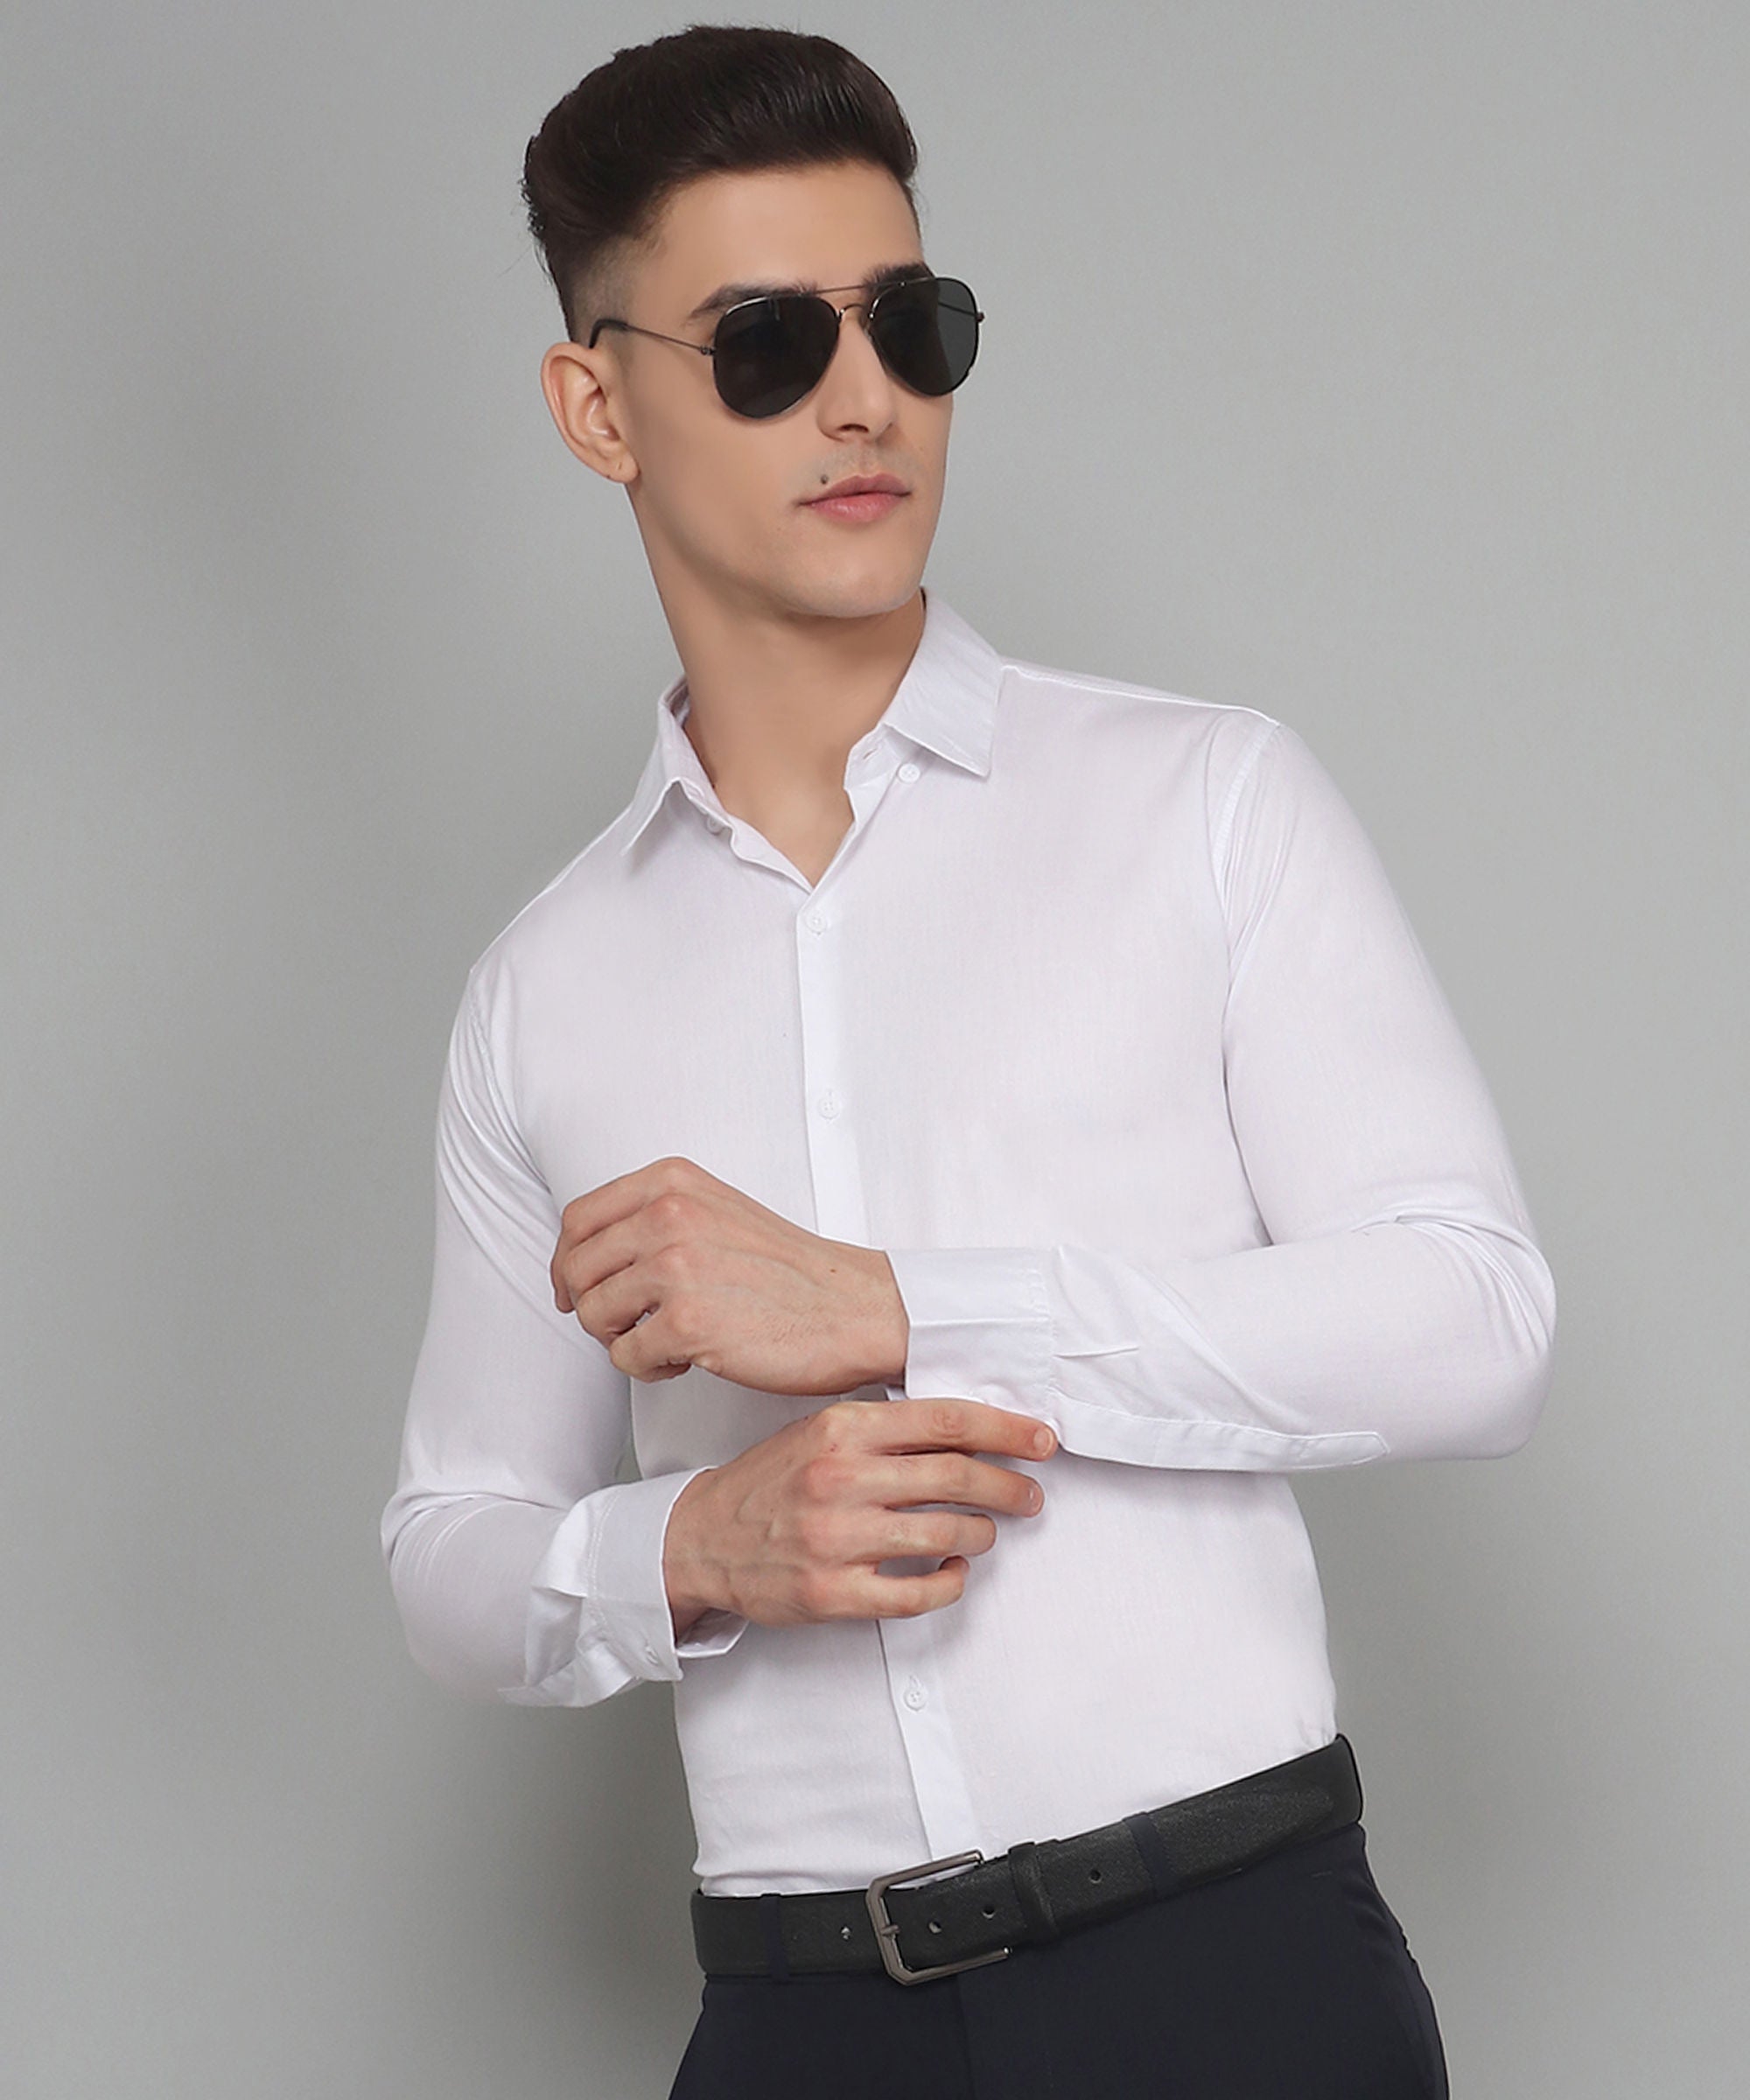 Exclusive TryBuy Premium White Dress Shirt for Men